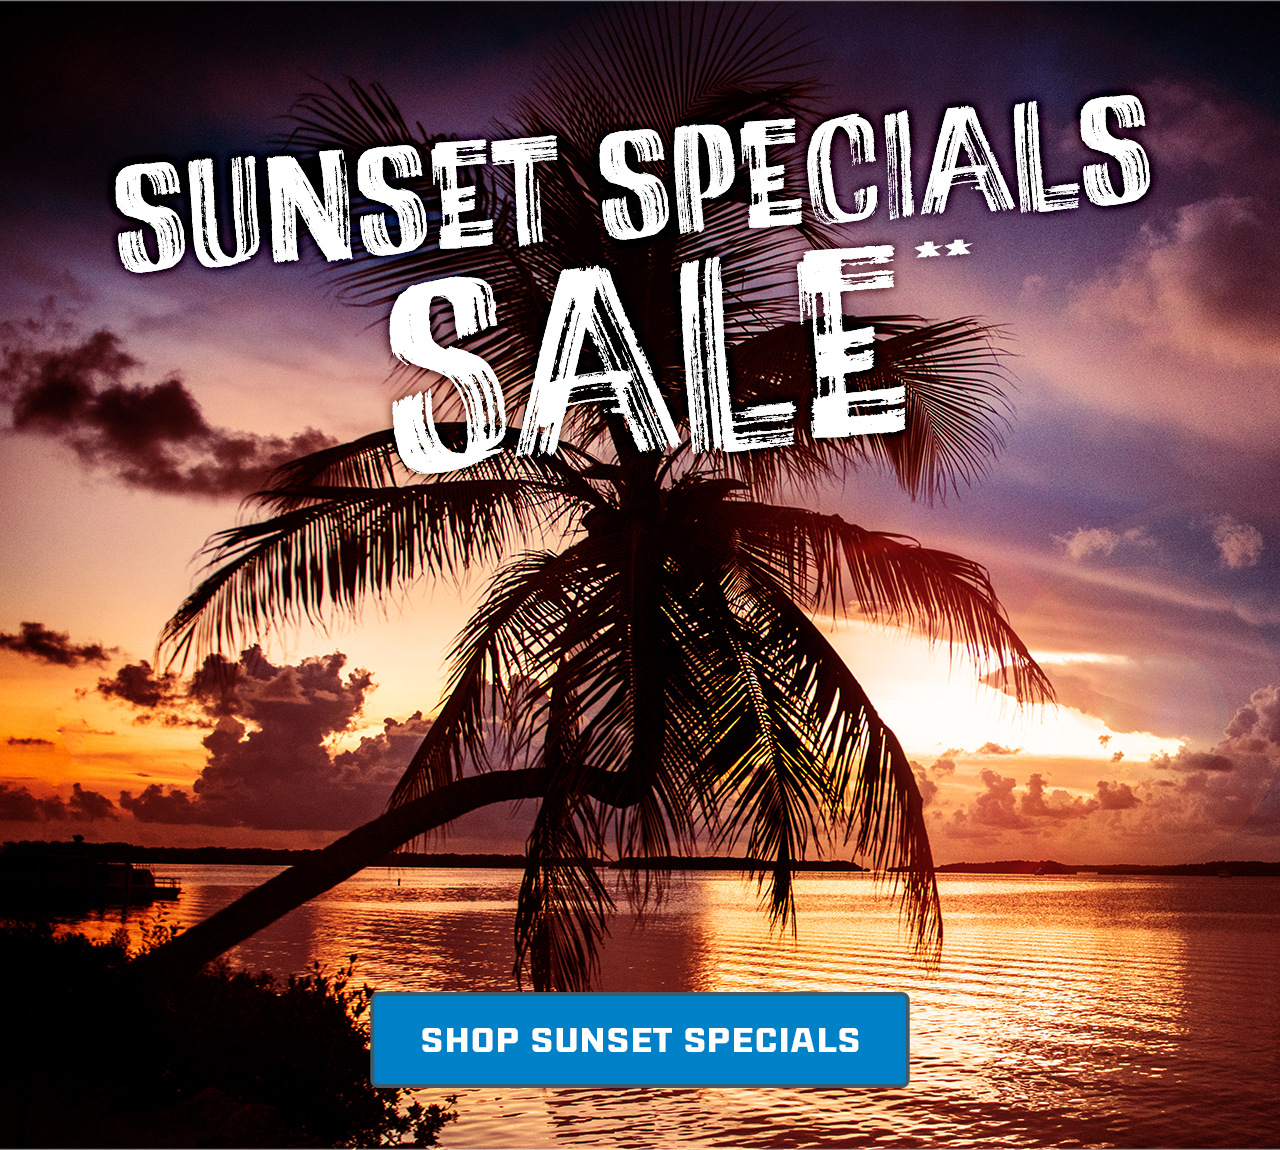 Sunset Specials Sale